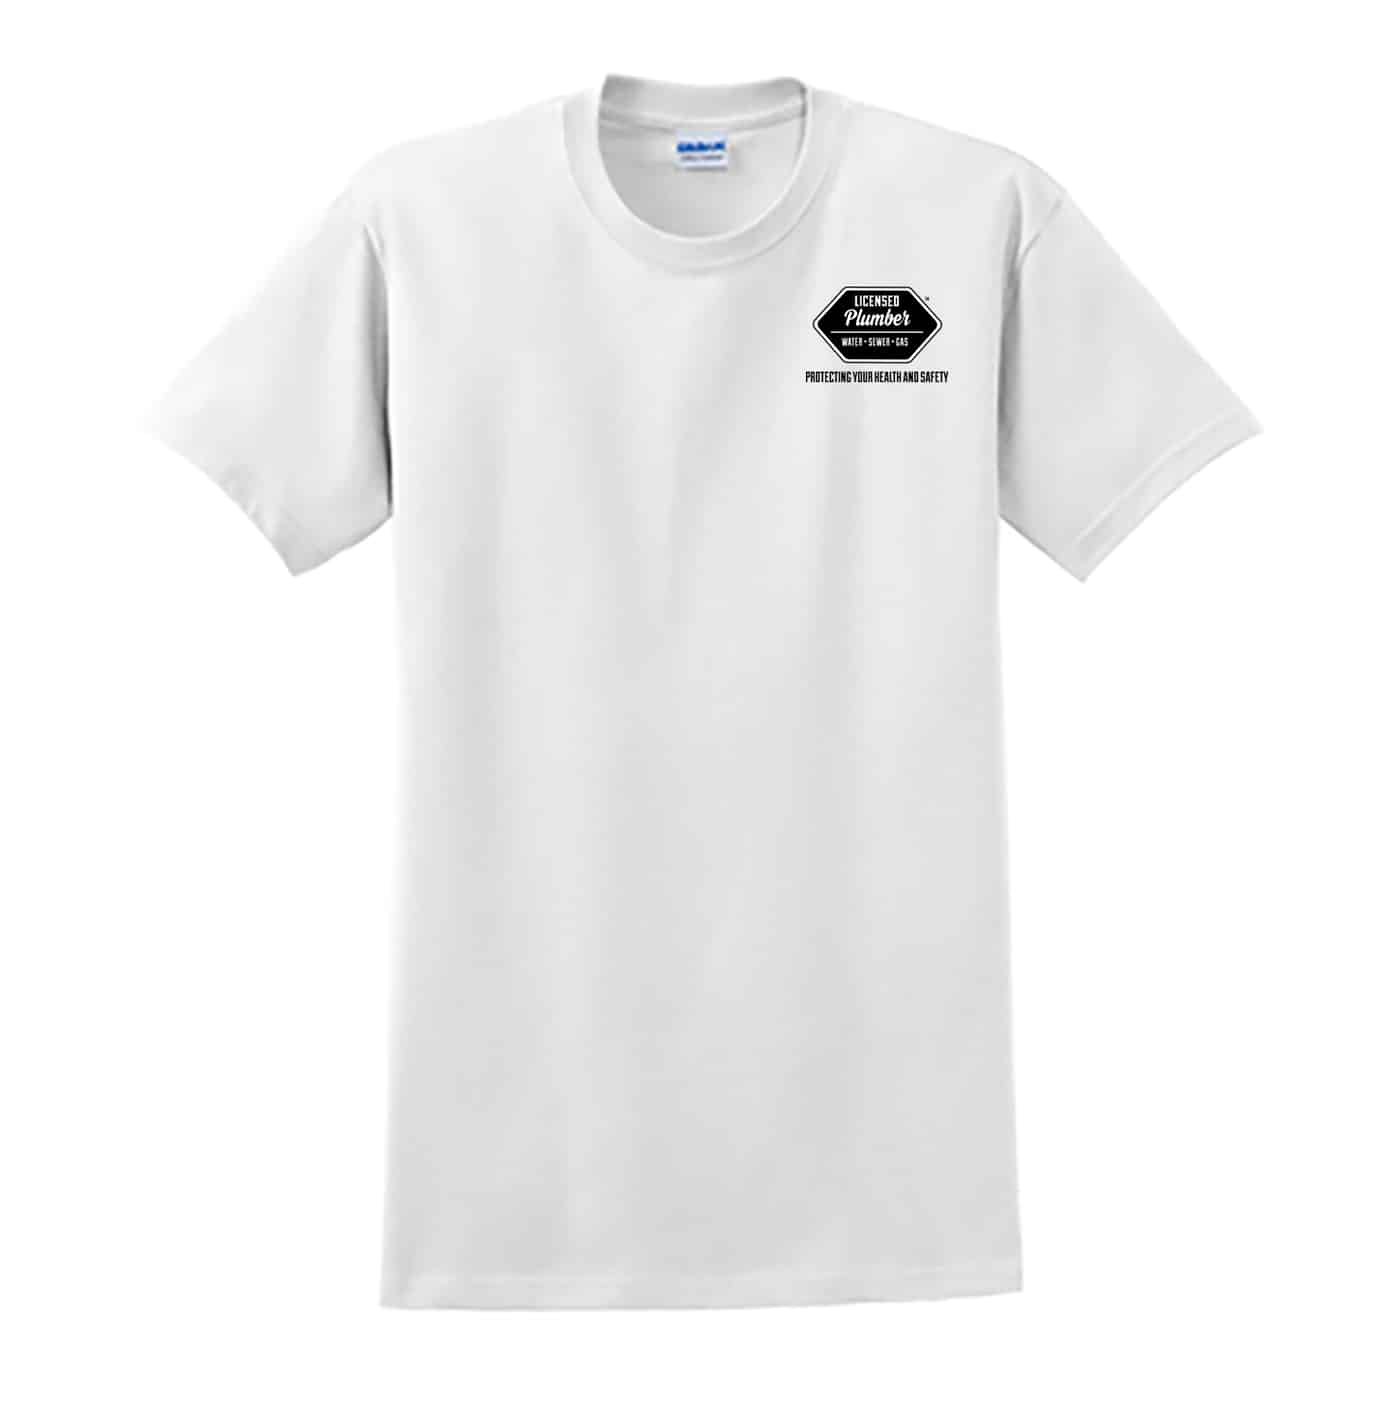 Licensed Plumber Short Sleeve T-Shirt | PHCEid Promotional